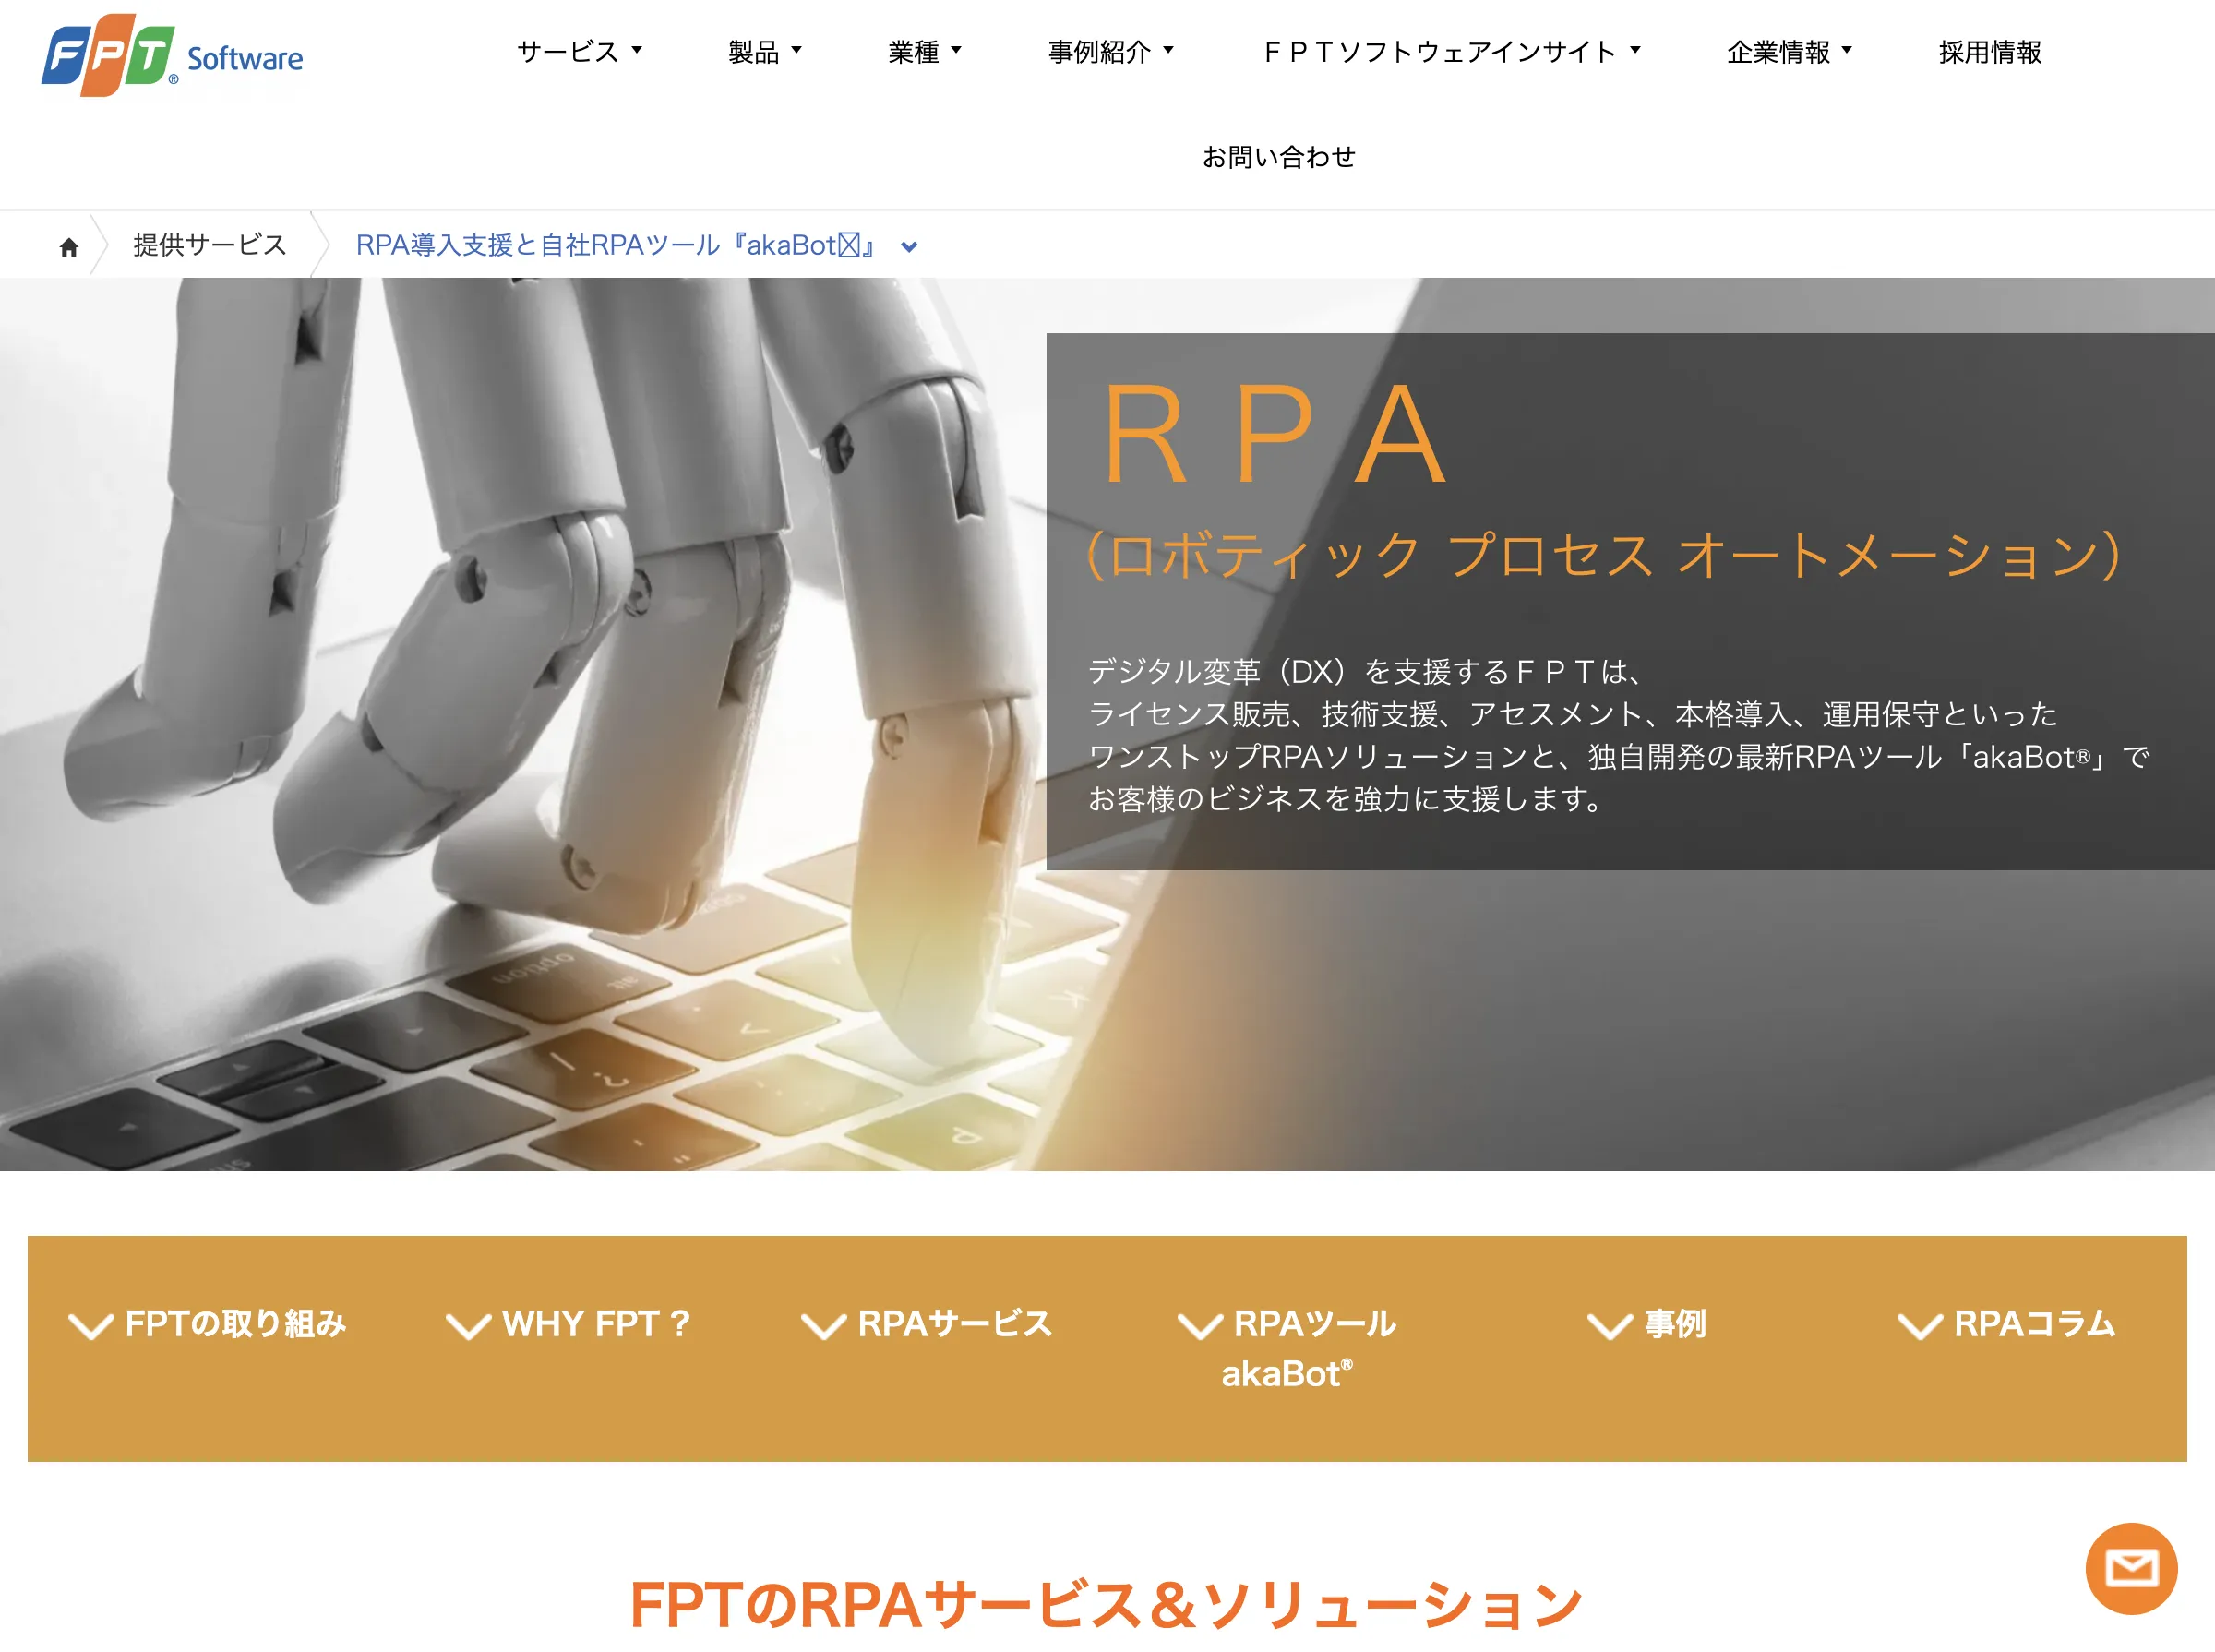 FPT RPAソリューションの紹介画像